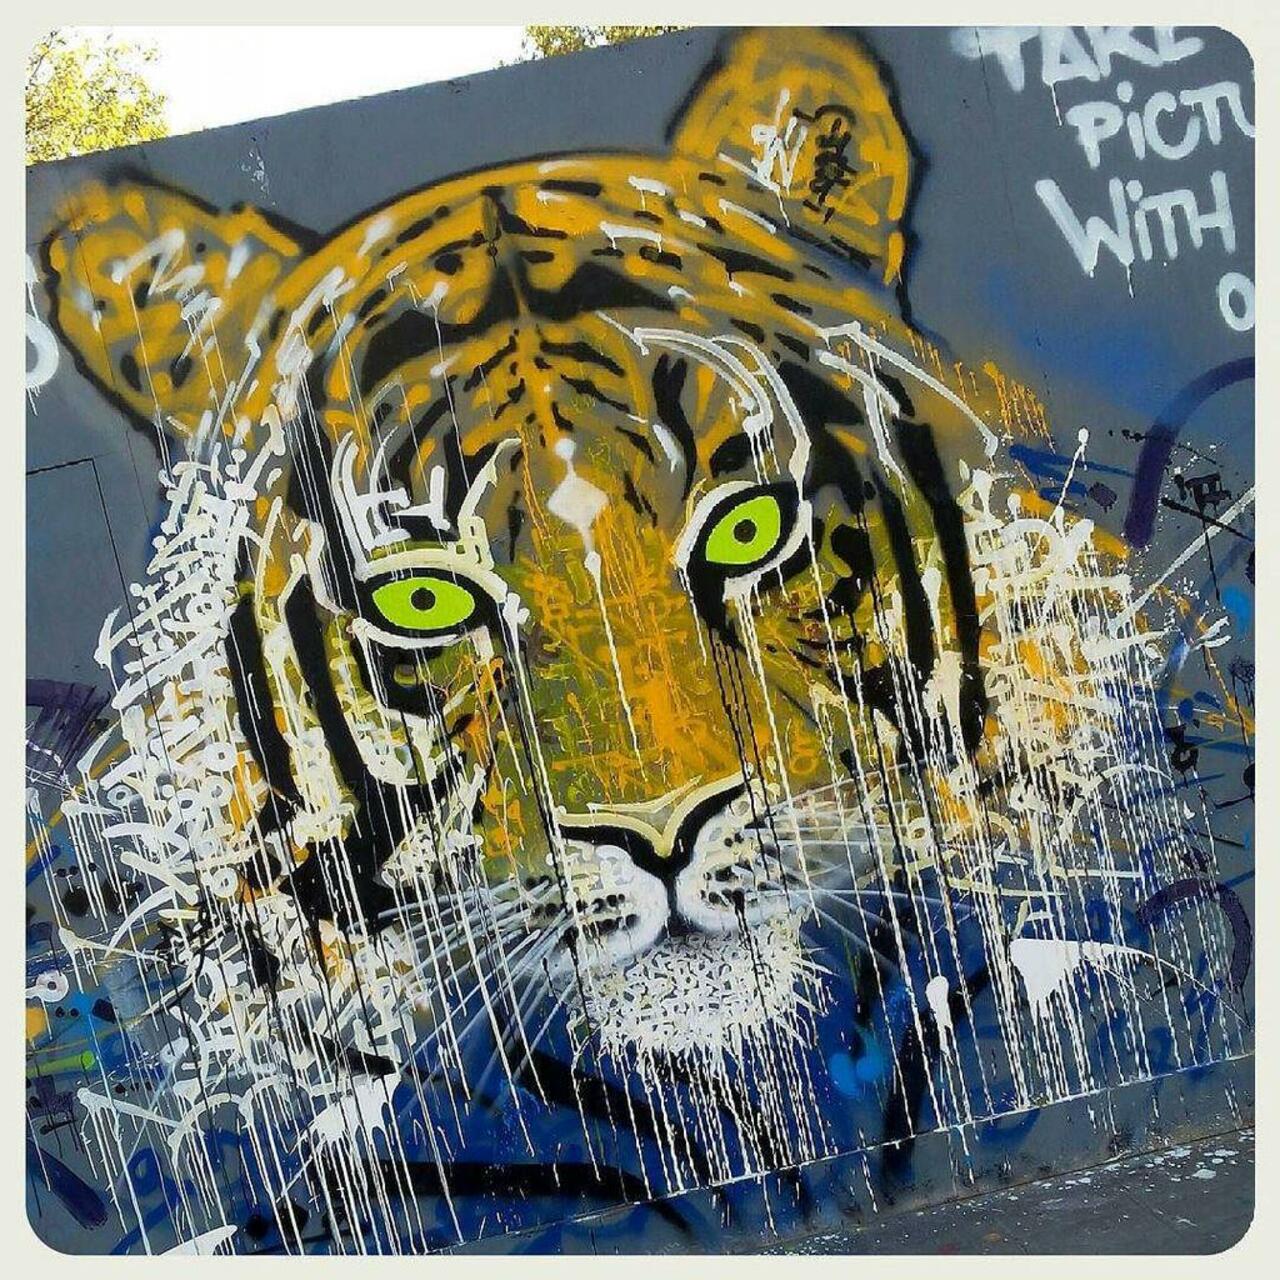 #streetart in #paris - flash the tiger in république !

#streearteverywhere #streetart #graffiti #urbanwalls #urban… http://t.co/SoXiEXtwuS